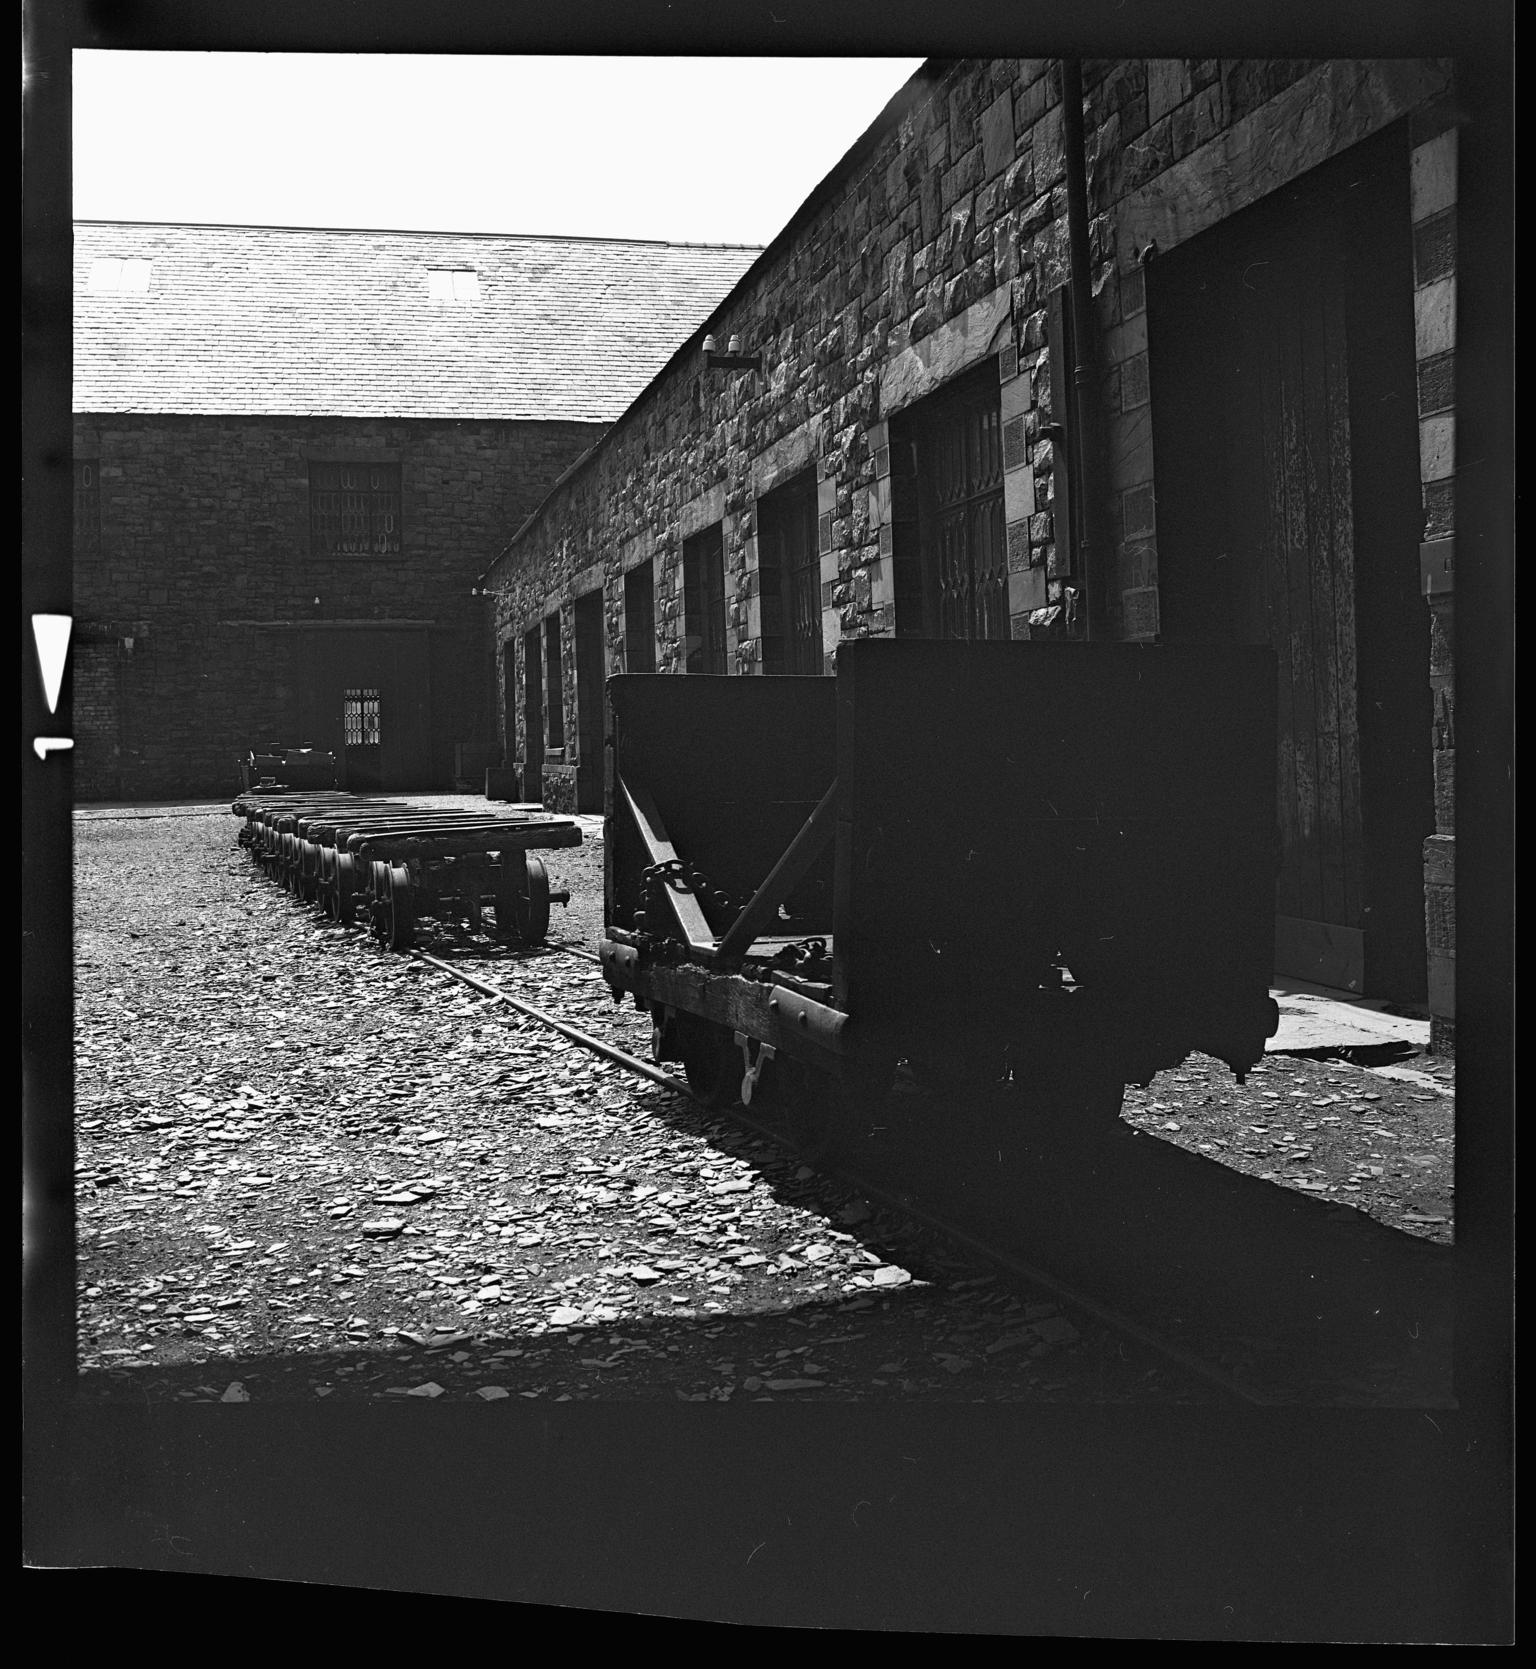 Welsh Slate Museum, film negative